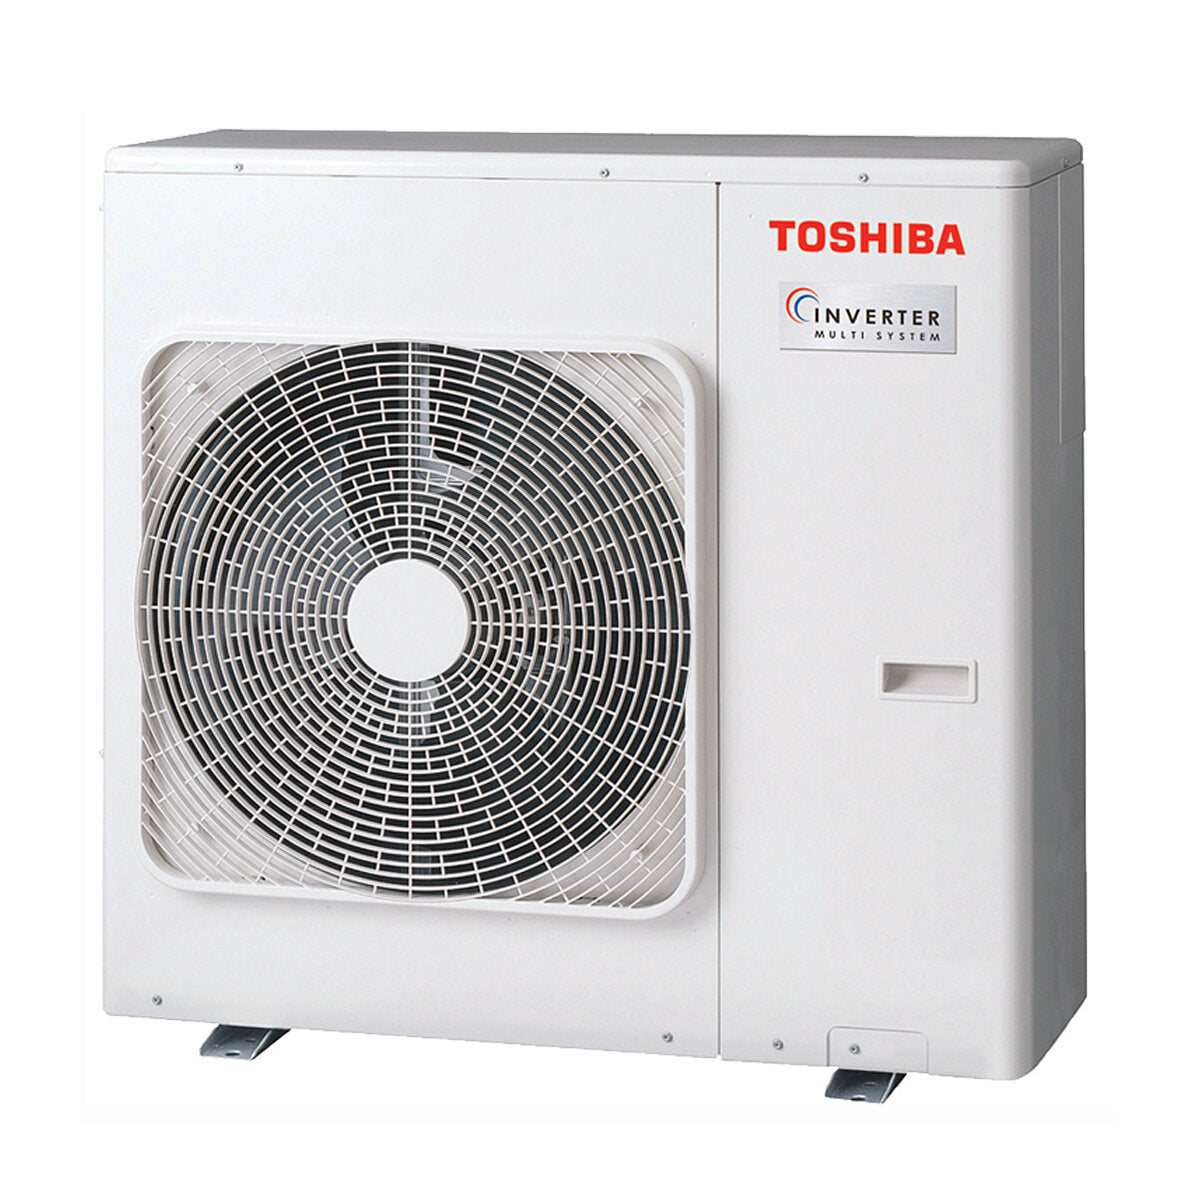 Toshiba Ductable Air Conditioner U2 penta split 9000 + 9000 + 9000 + 9000 + 12000 BTU inverter A ++ outdoor unit 10.0 kW